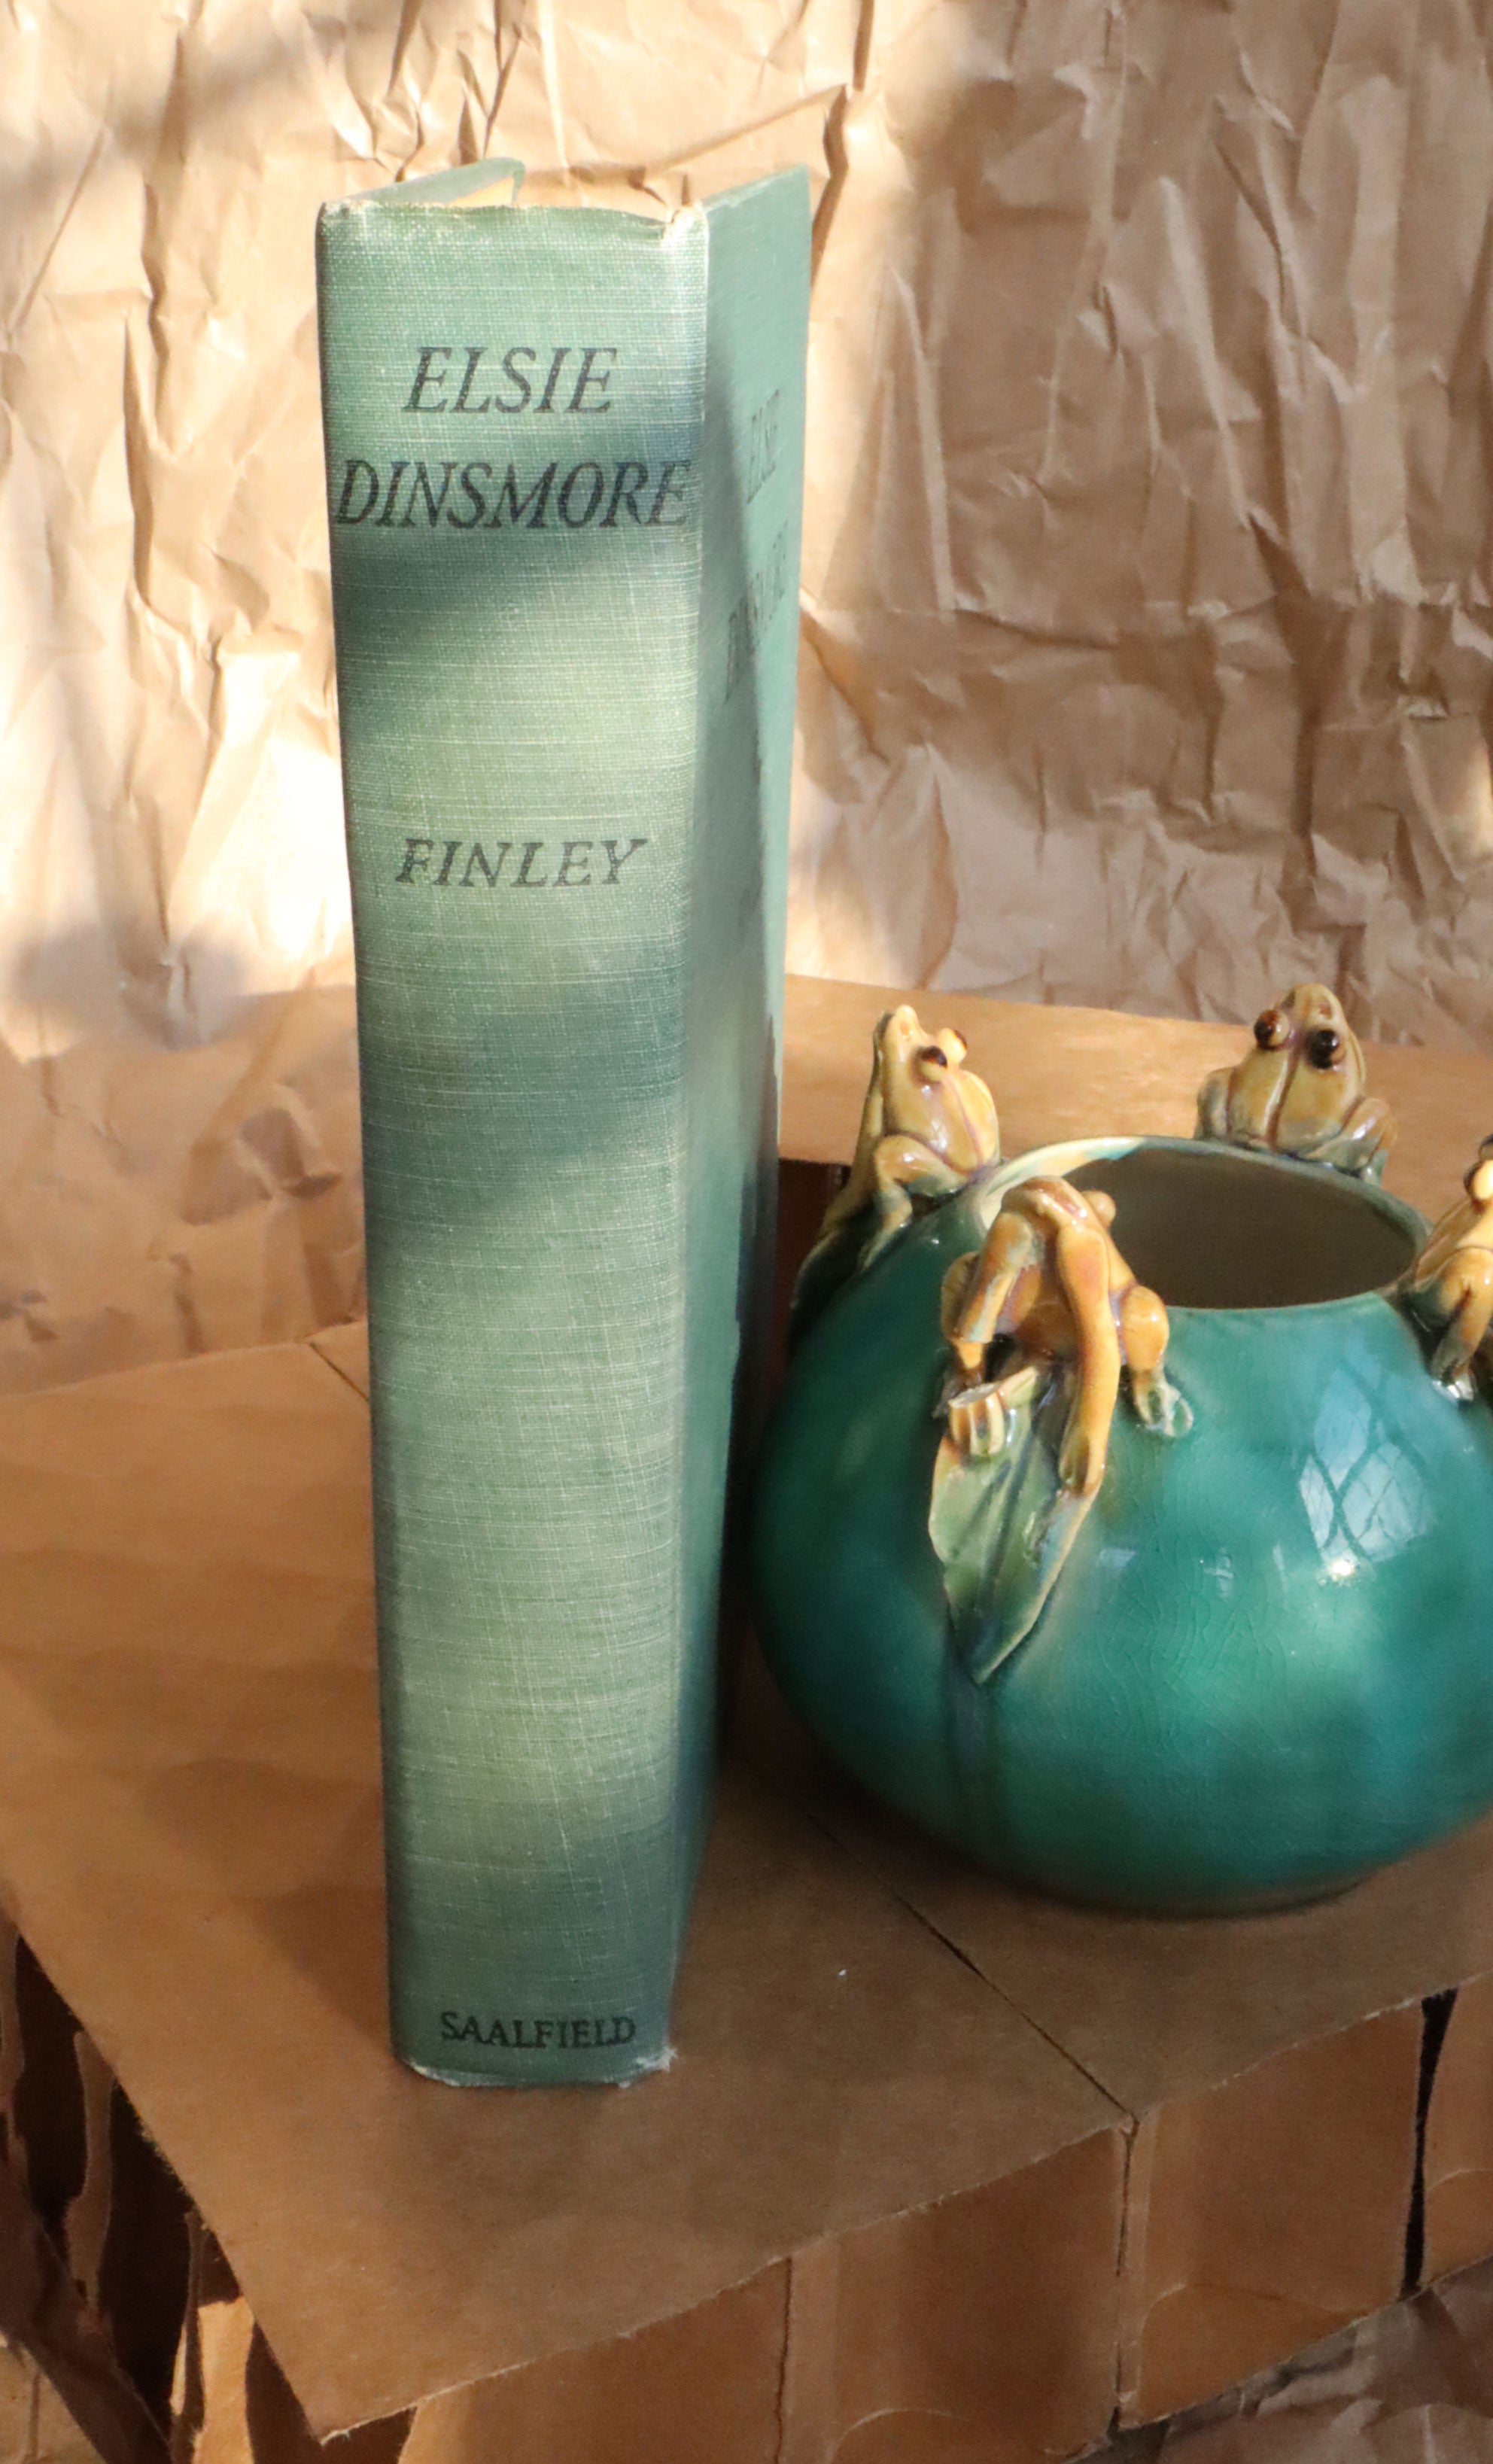 Vintage H.C. Book - Elsie Dinsmore by Finley